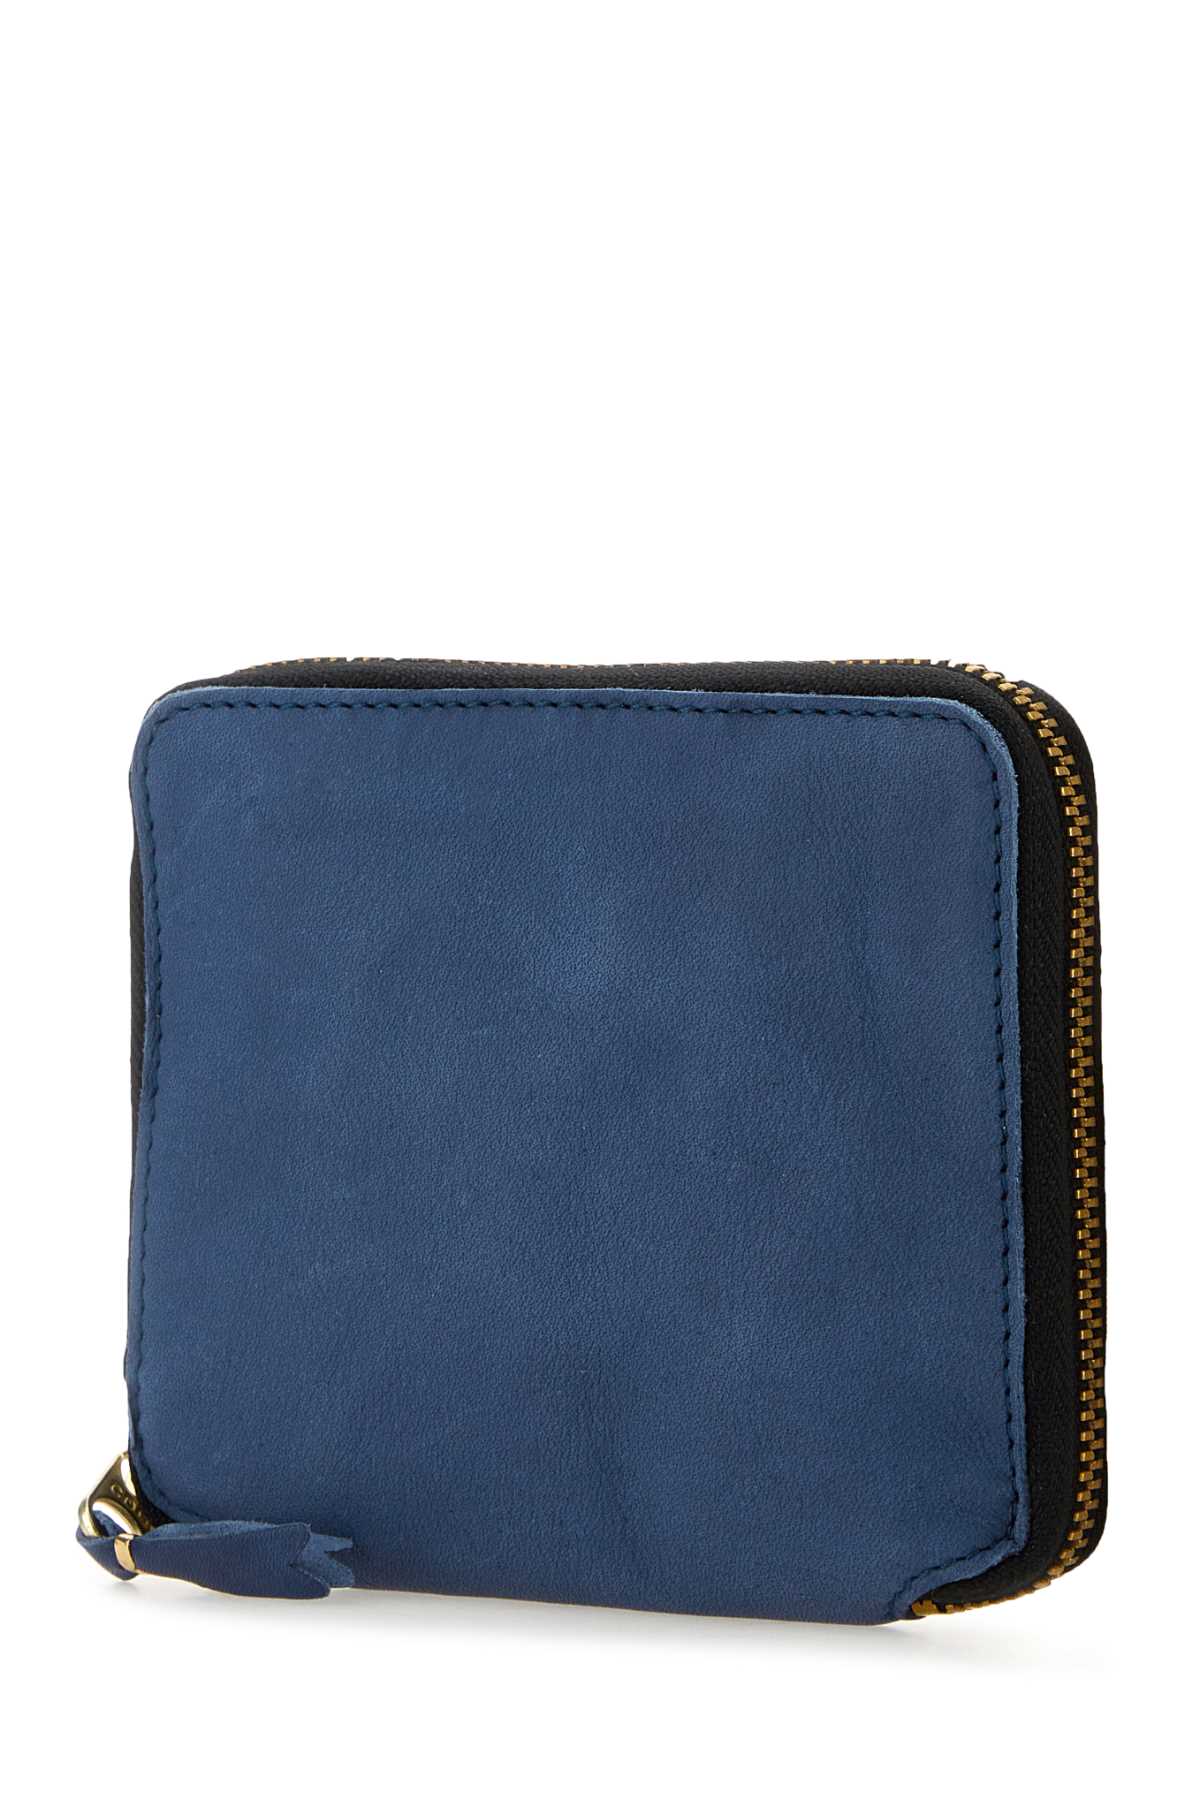 Comme Des Garçons Blue Leather Wallet In Navy